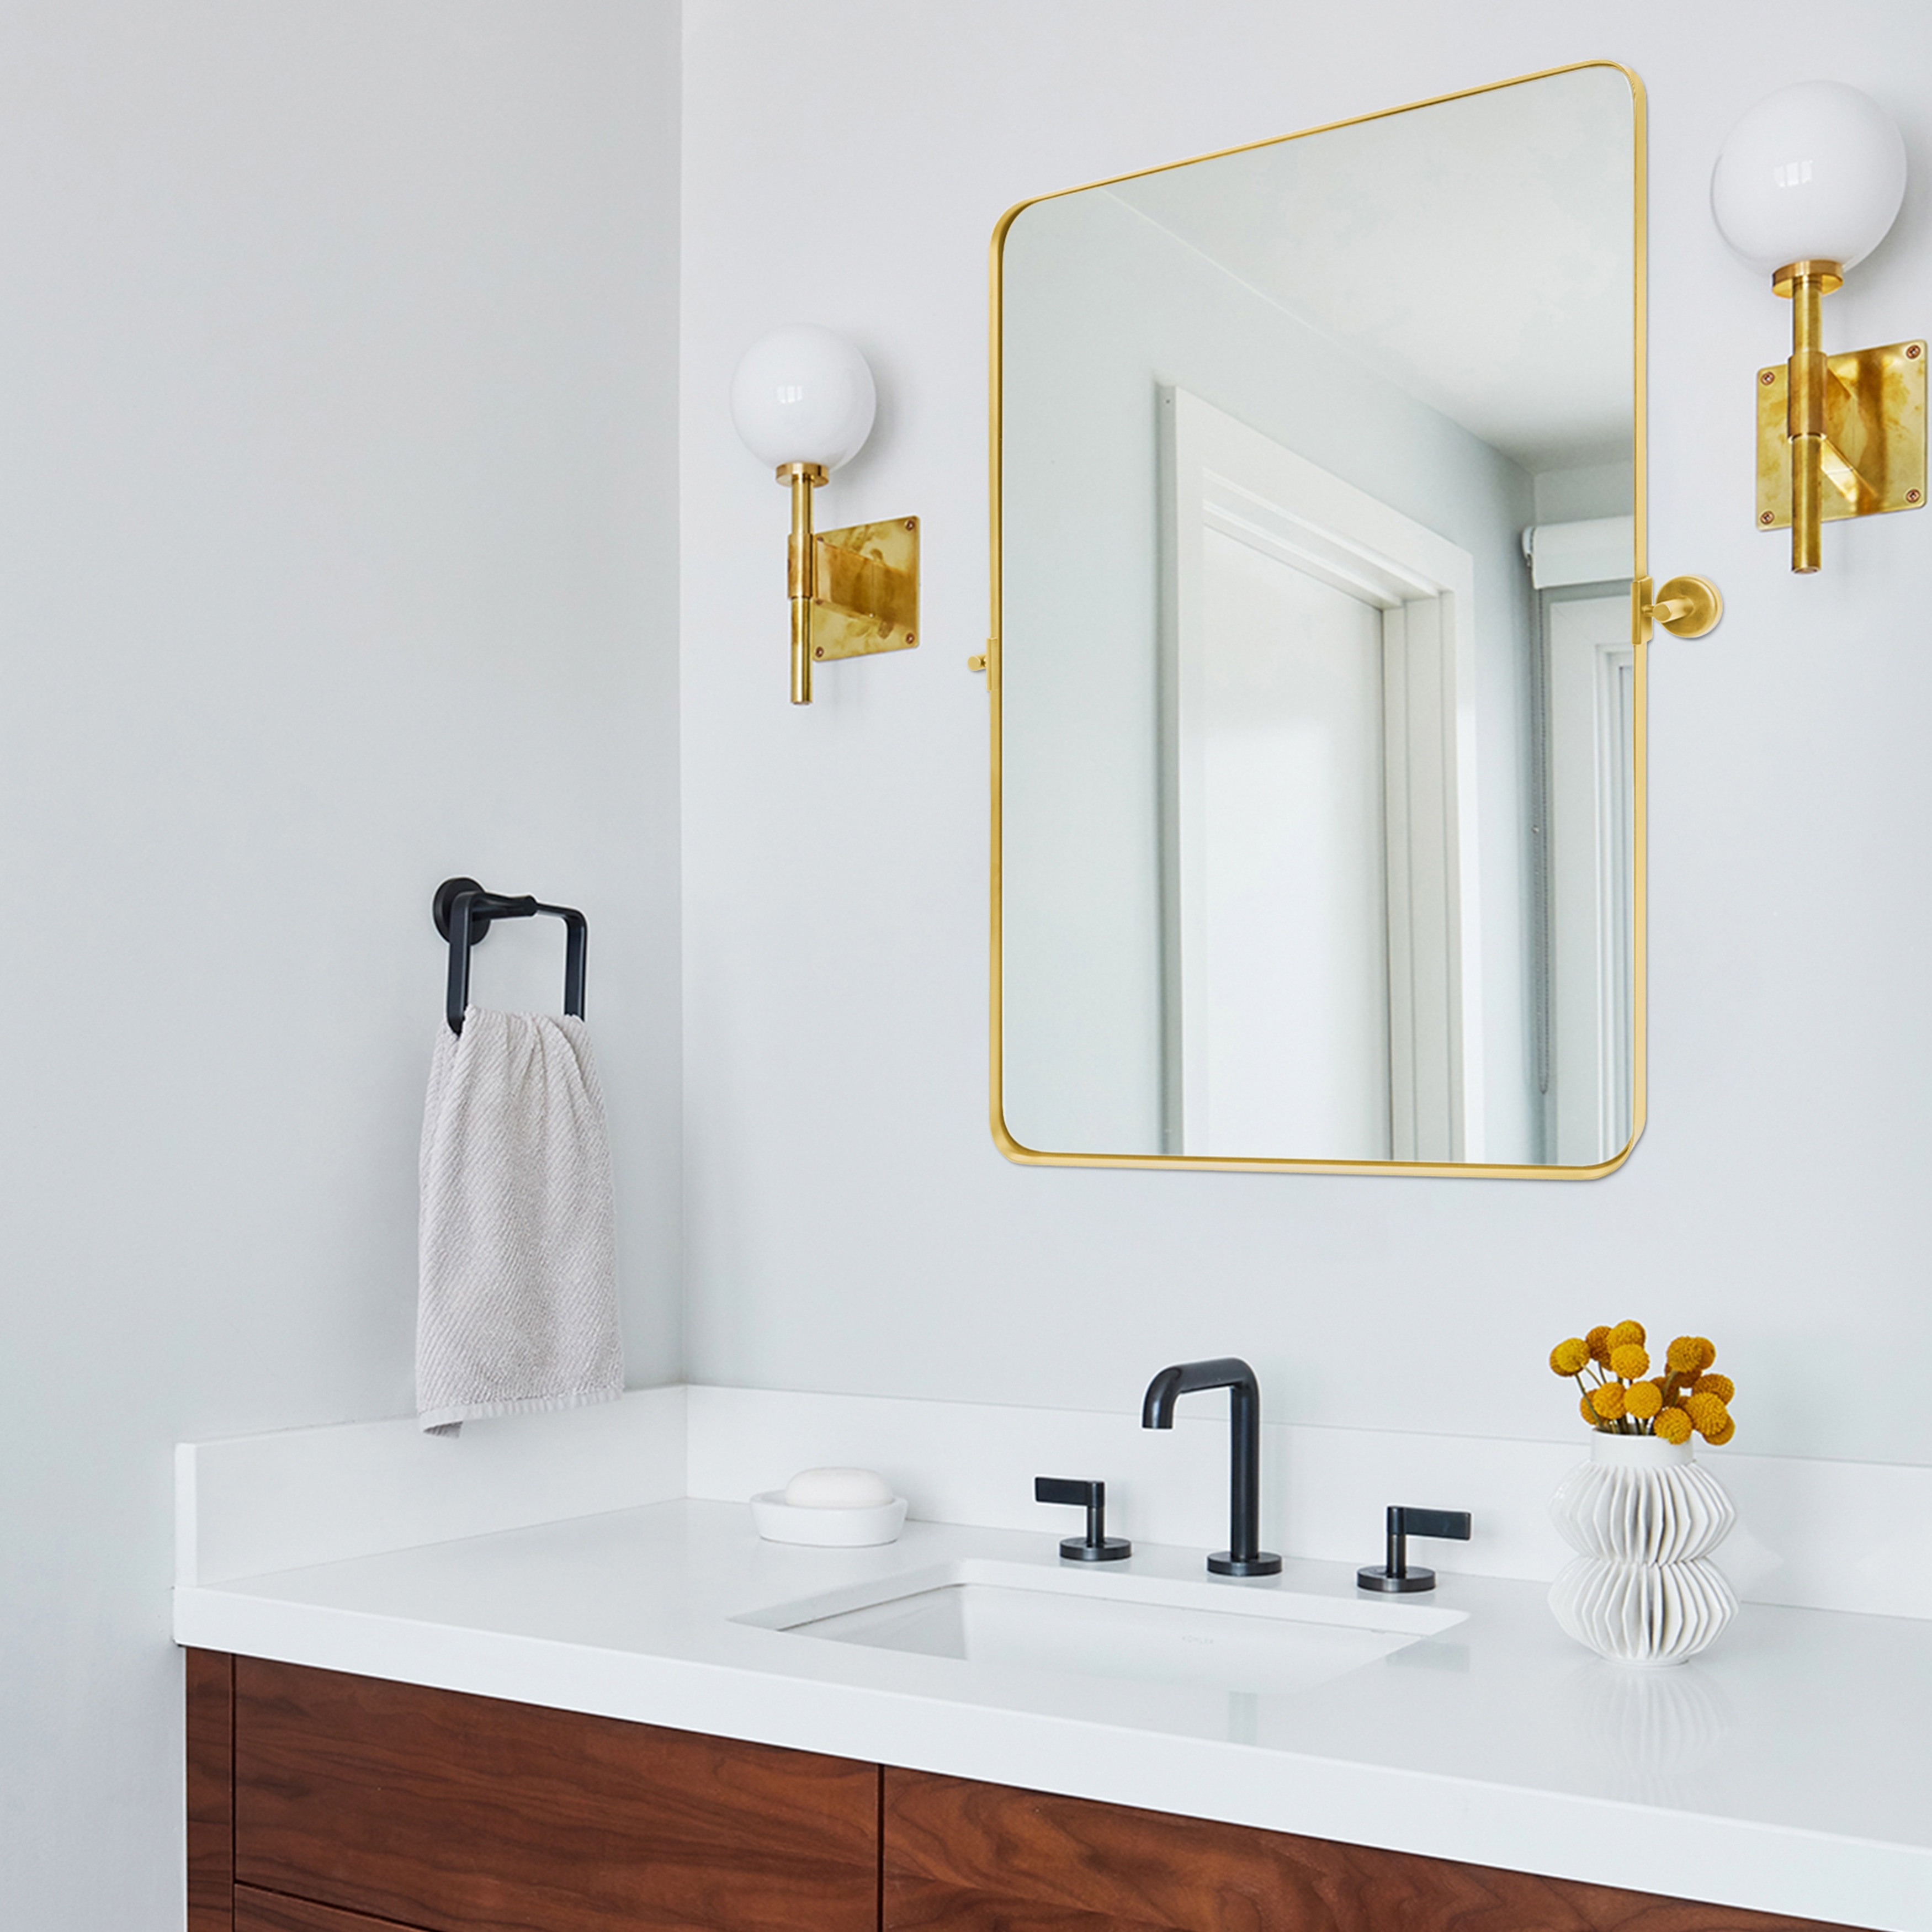 https://ak1.ostkcdn.com/images/products/is/images/direct/fa1981384fad90a21add5c6886e03e8aca09ffec/Pivot-Bathroom-Mirror-Metal-Framed-Pivoting-Bathroom-Tilting-Wall-Mirror%2C-Rounded-Corner-Rectangle-Vanity-Mirror-Hanging-Mirror.jpg